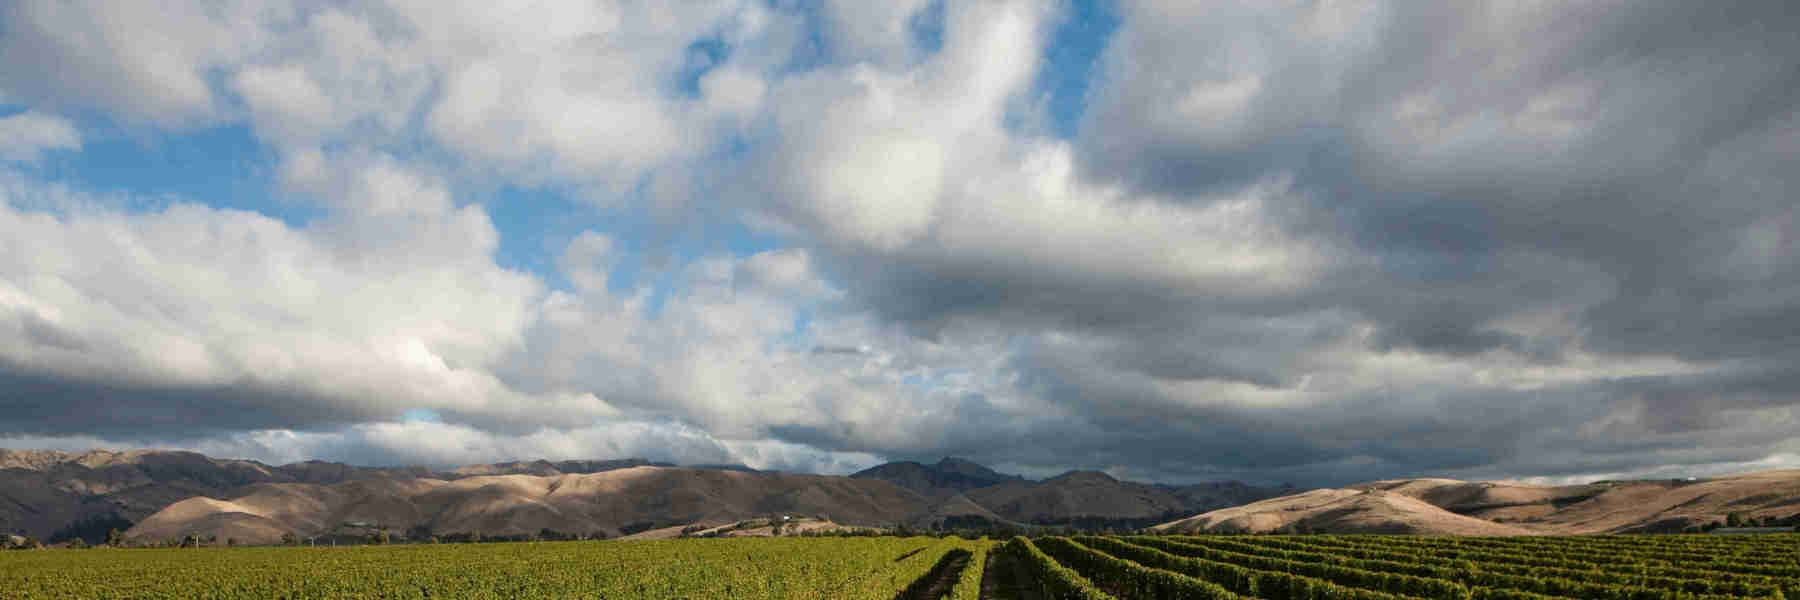 Cloudy Bay's Sauvignon Blanc Vineyards